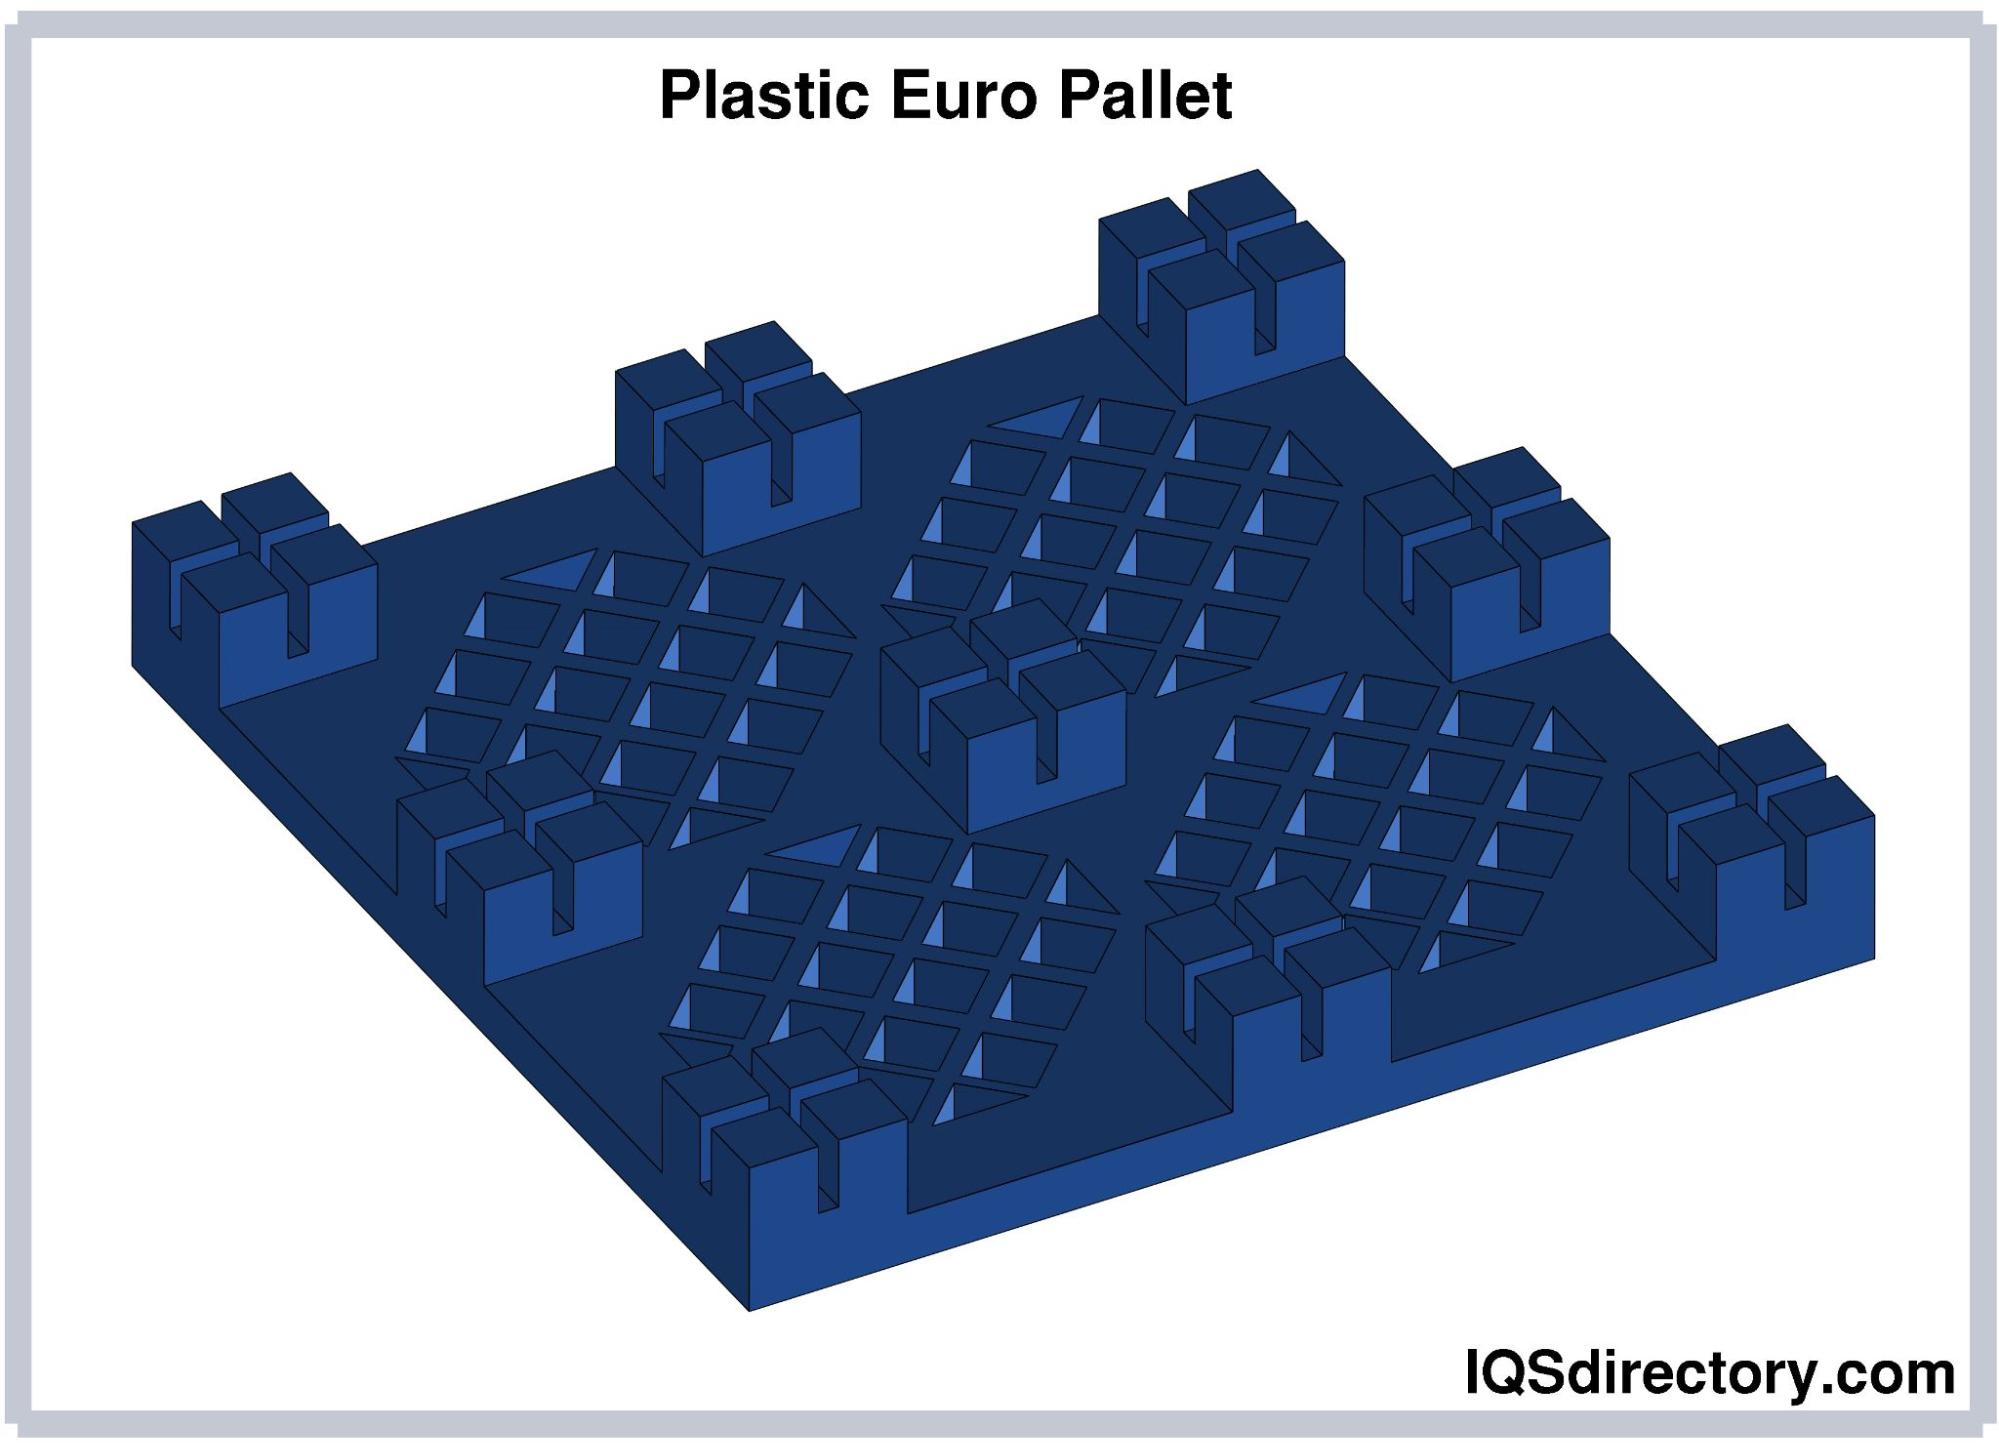 Plastic Euro Pallet